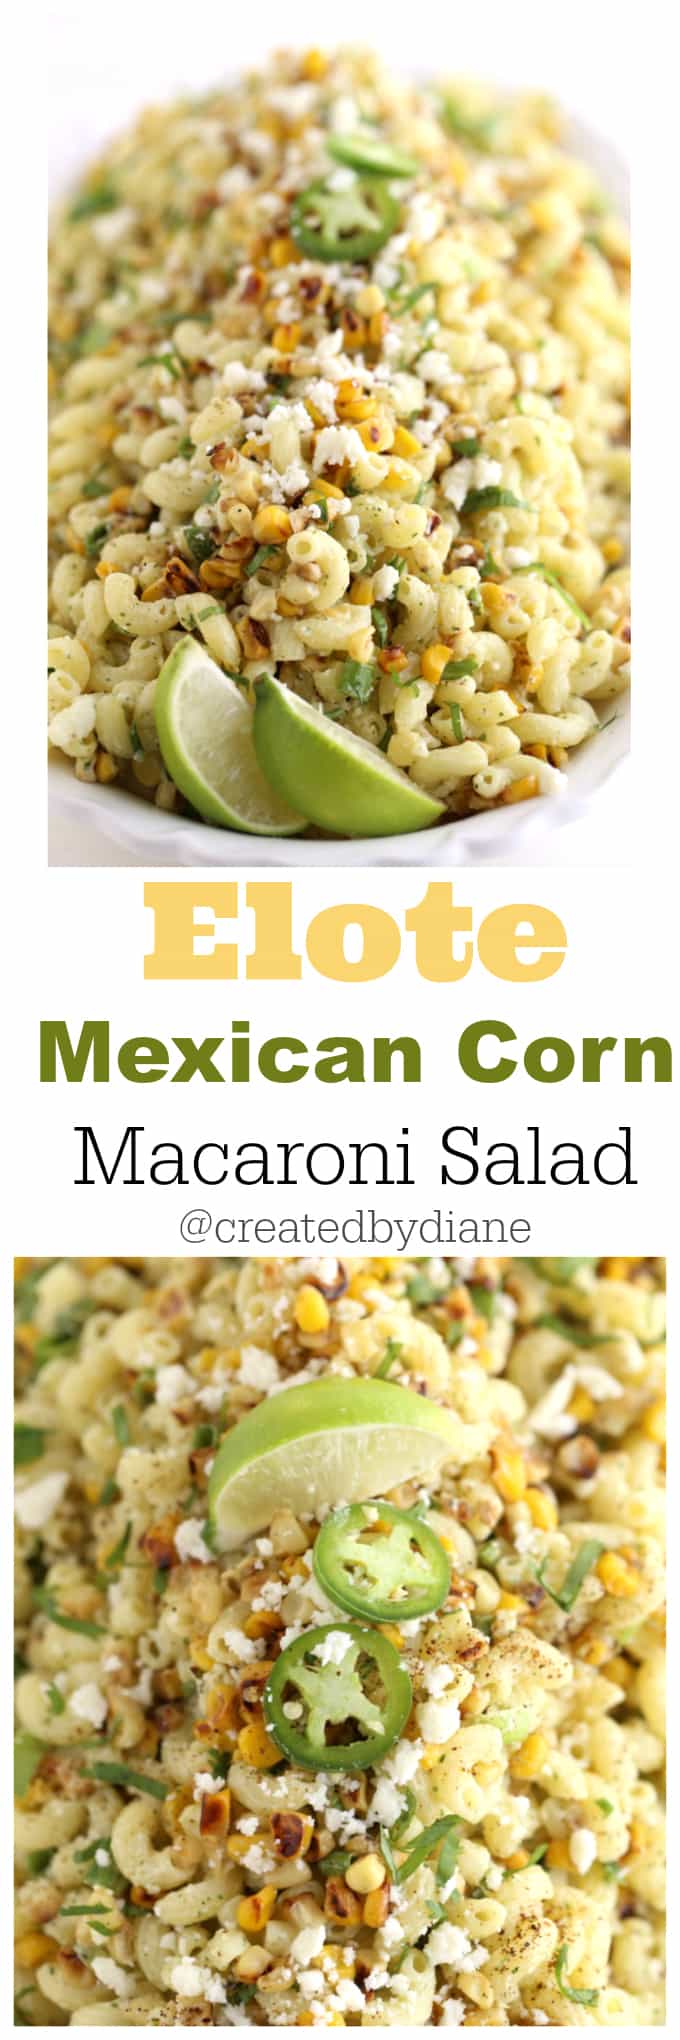 Mexican Macaroni Salad @createdbydiane